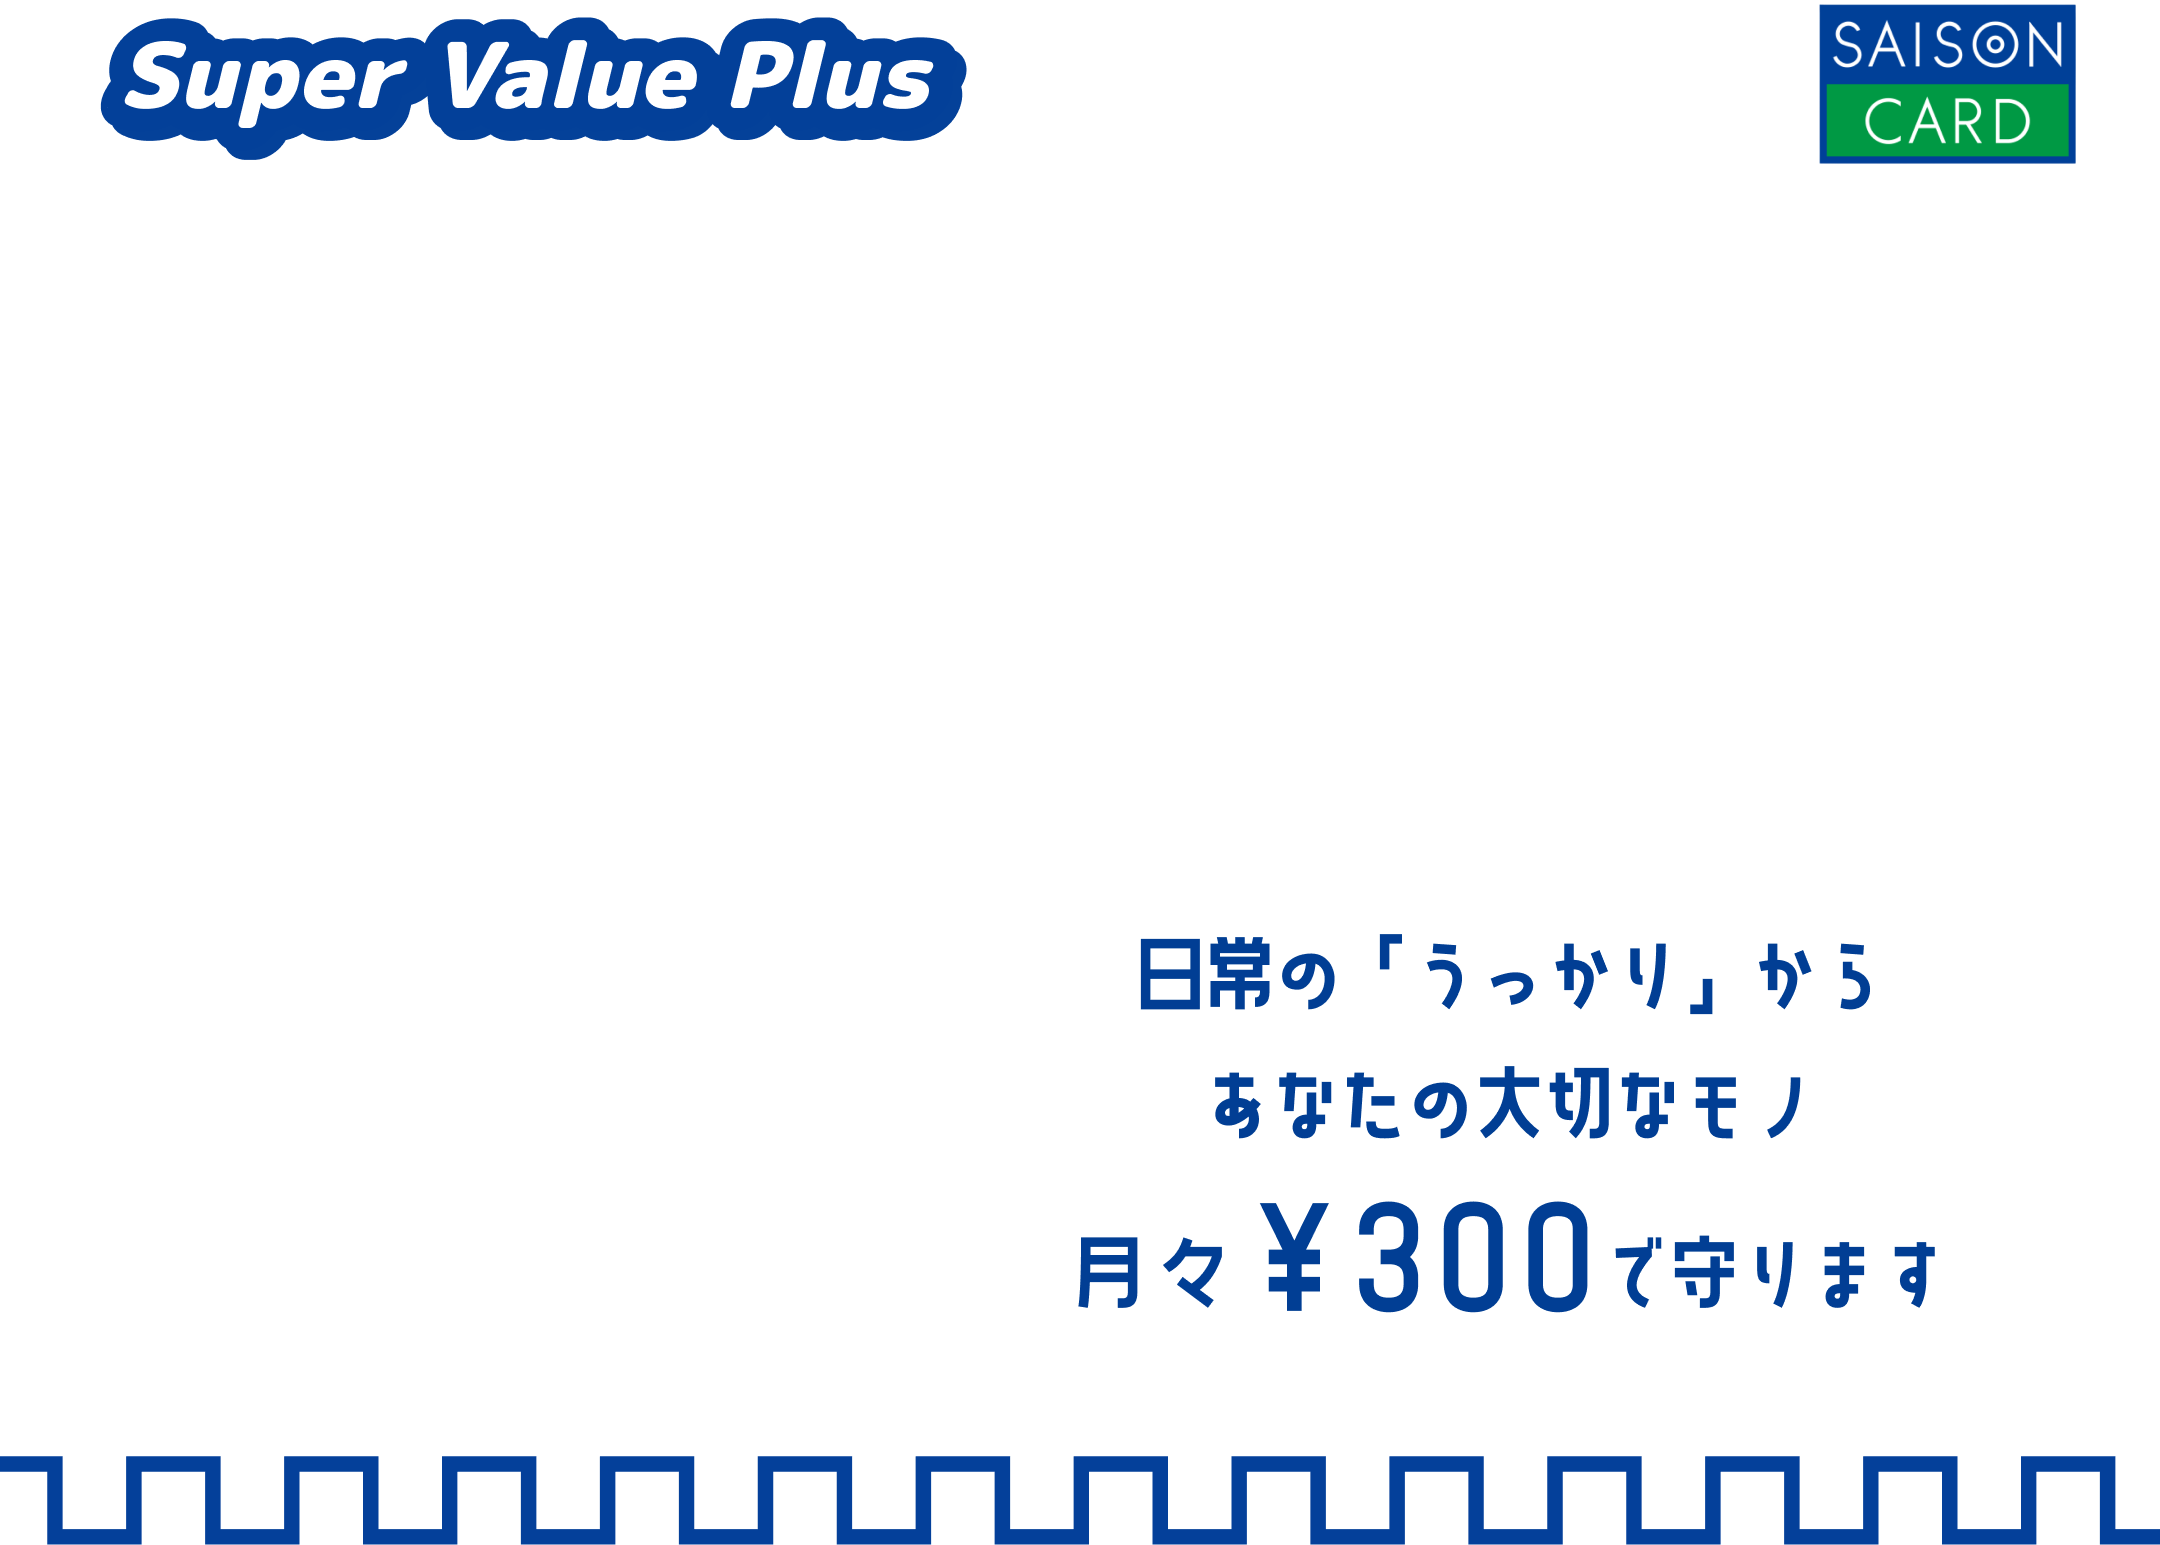 Super Value Plus SAISON CARD 日常の「うっかり」からあなたの大切なモノ月々￥300で守ります おかげさまで加入件数100万件!